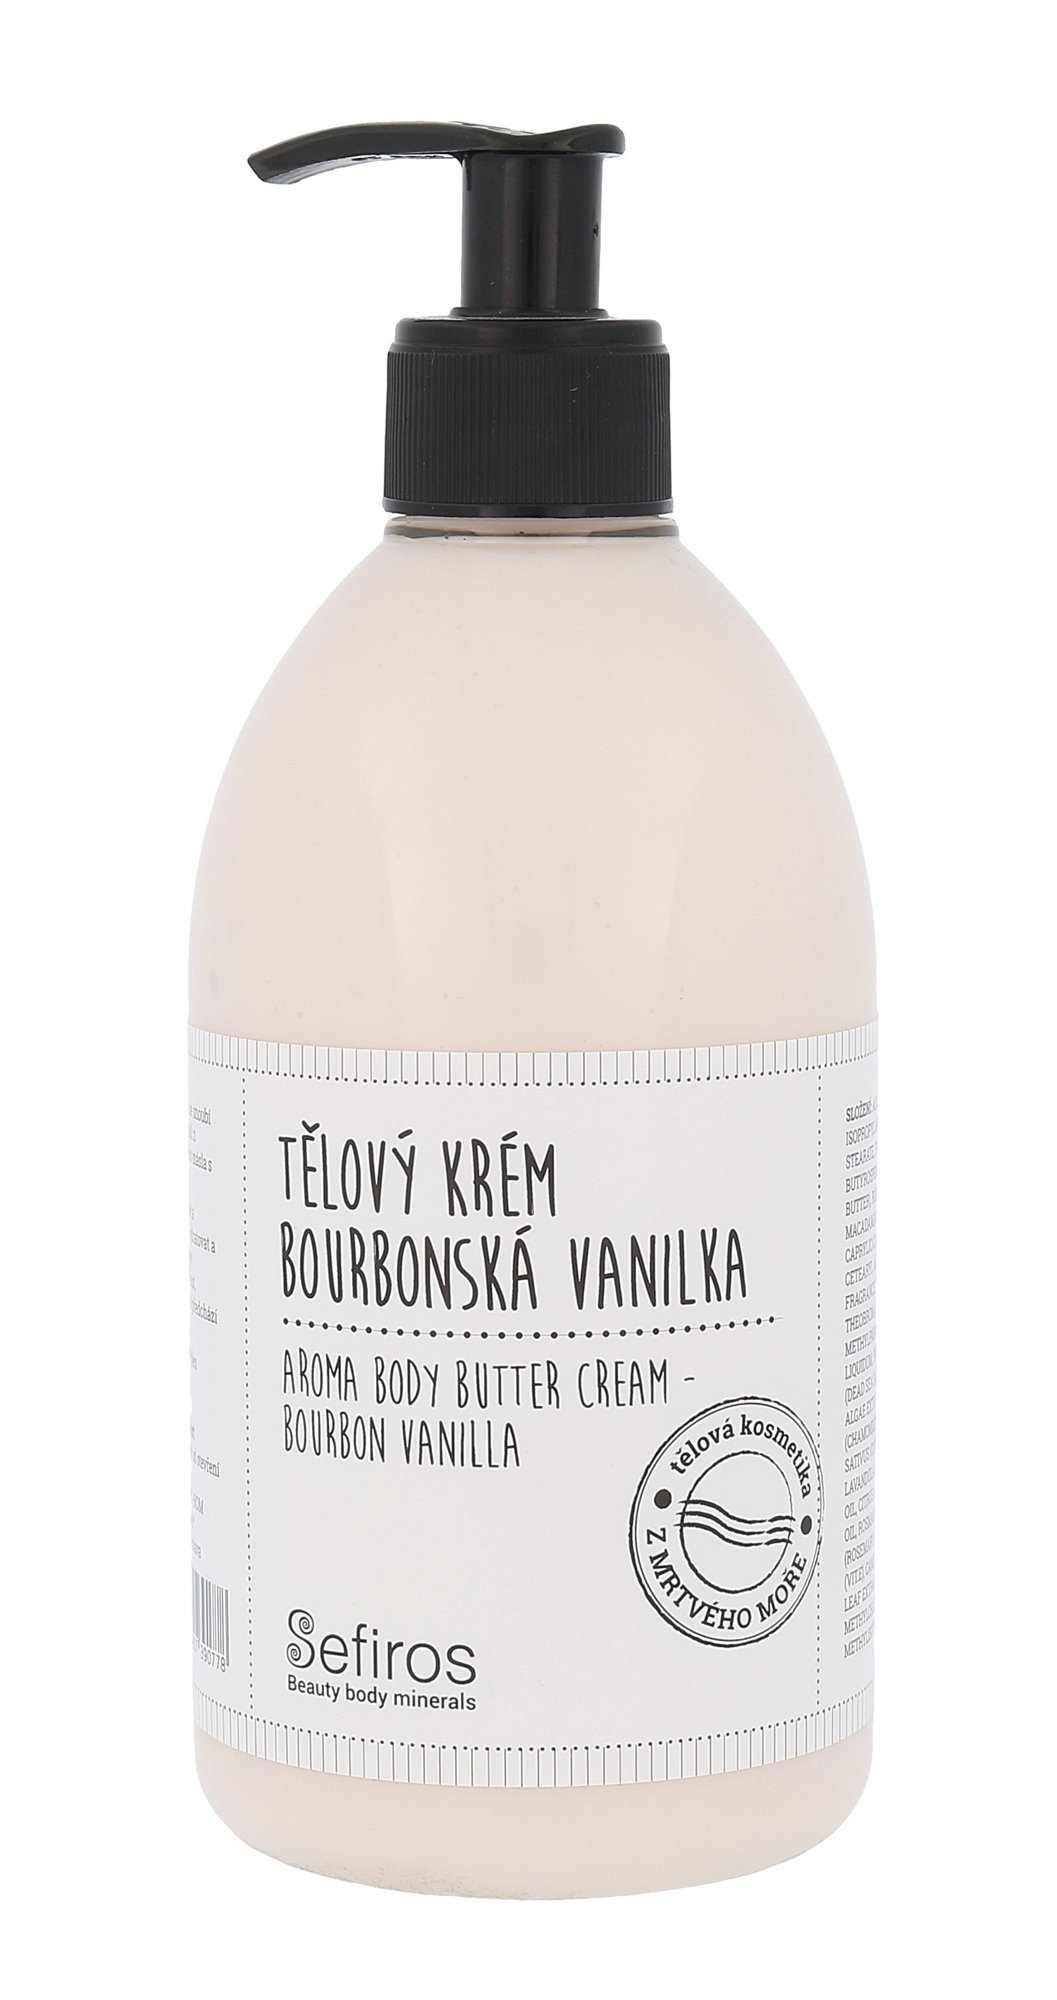 Sefiros Aroma Body Butter Cream Bourbon Vanilla